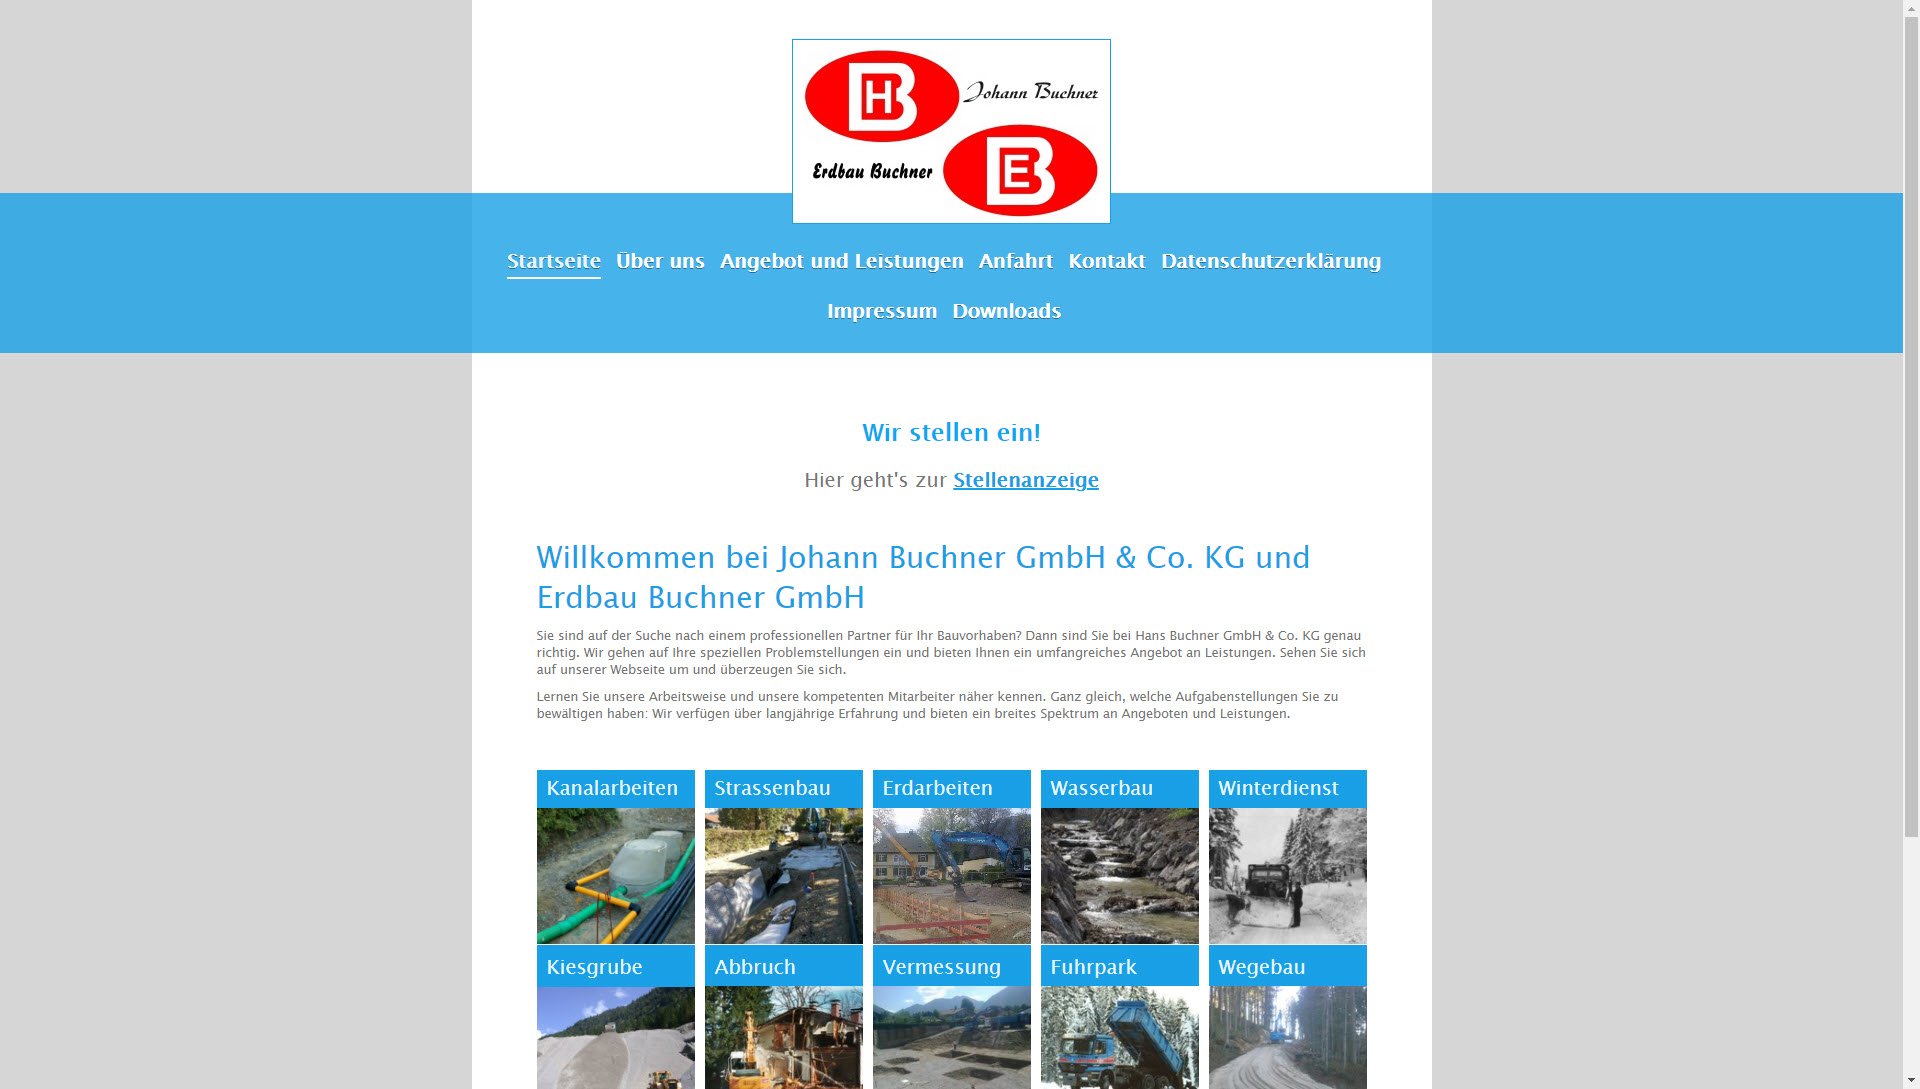 Johann Buchner GmbH & Co. KG